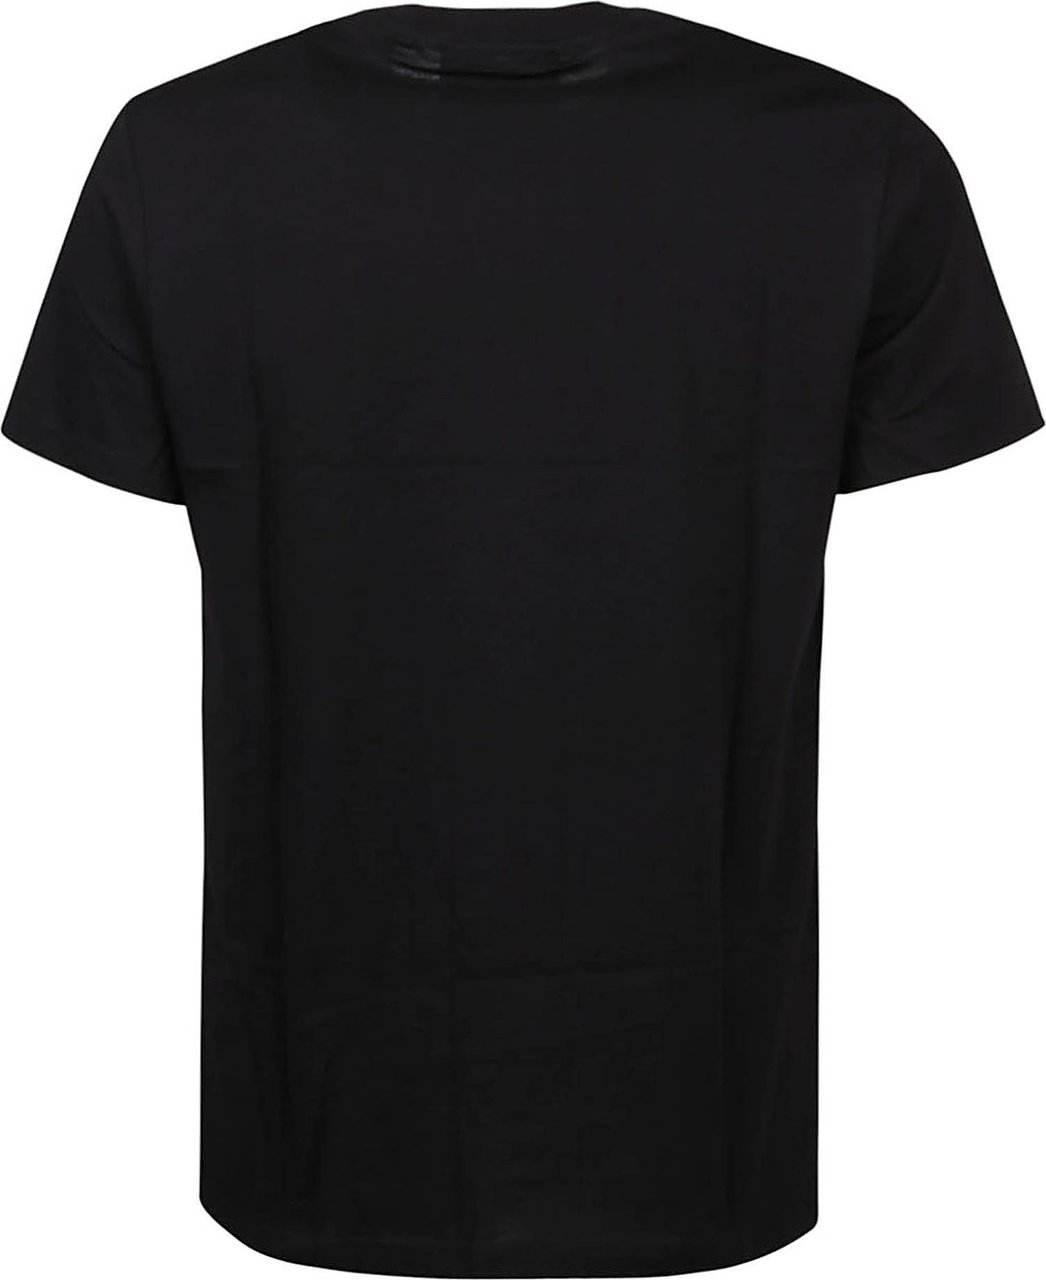 Versace Jeans Couture Logo Thick Petrol T-shirt Black Zwart